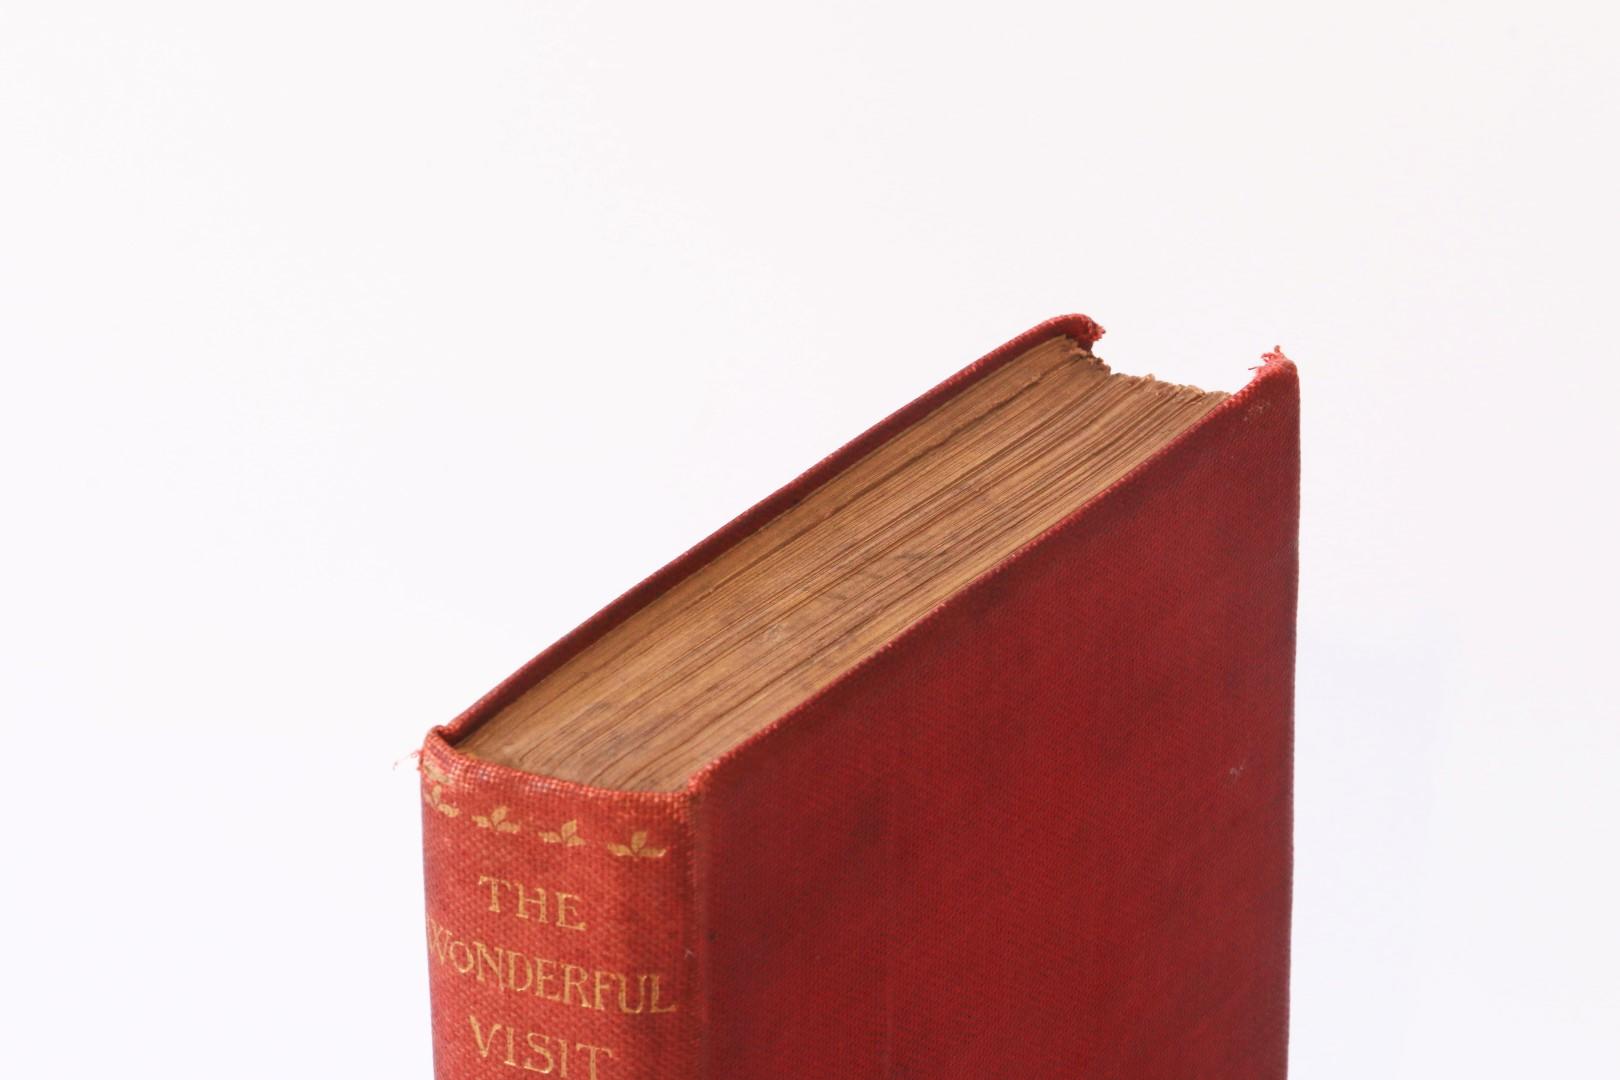 H.G. Wells - The Wonderful Visit - J.M. Dent, 1895, First Edition.